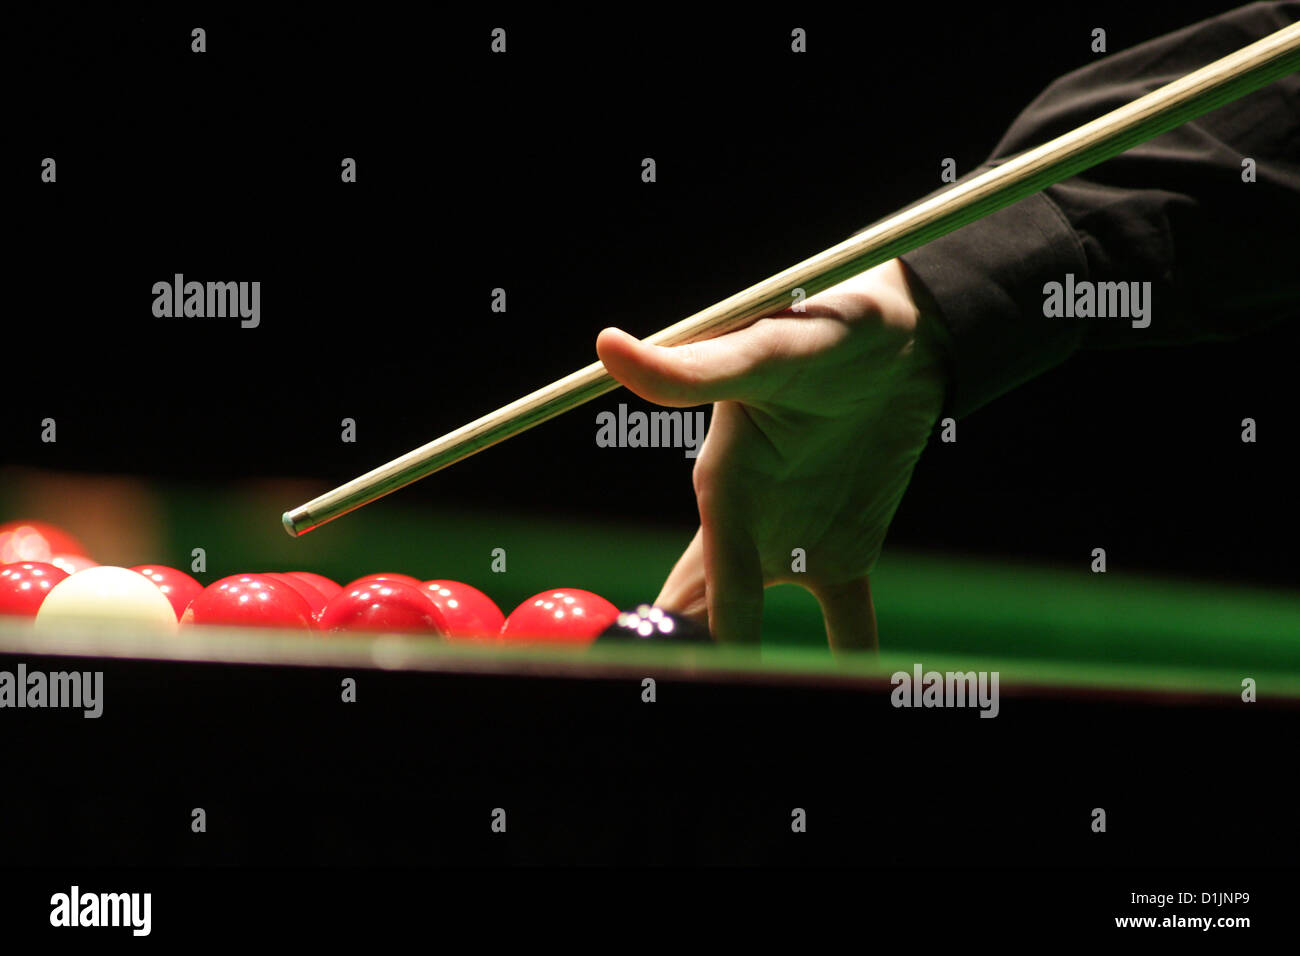 Snooker-Spieler Mann mit dem Queueball Stockfoto